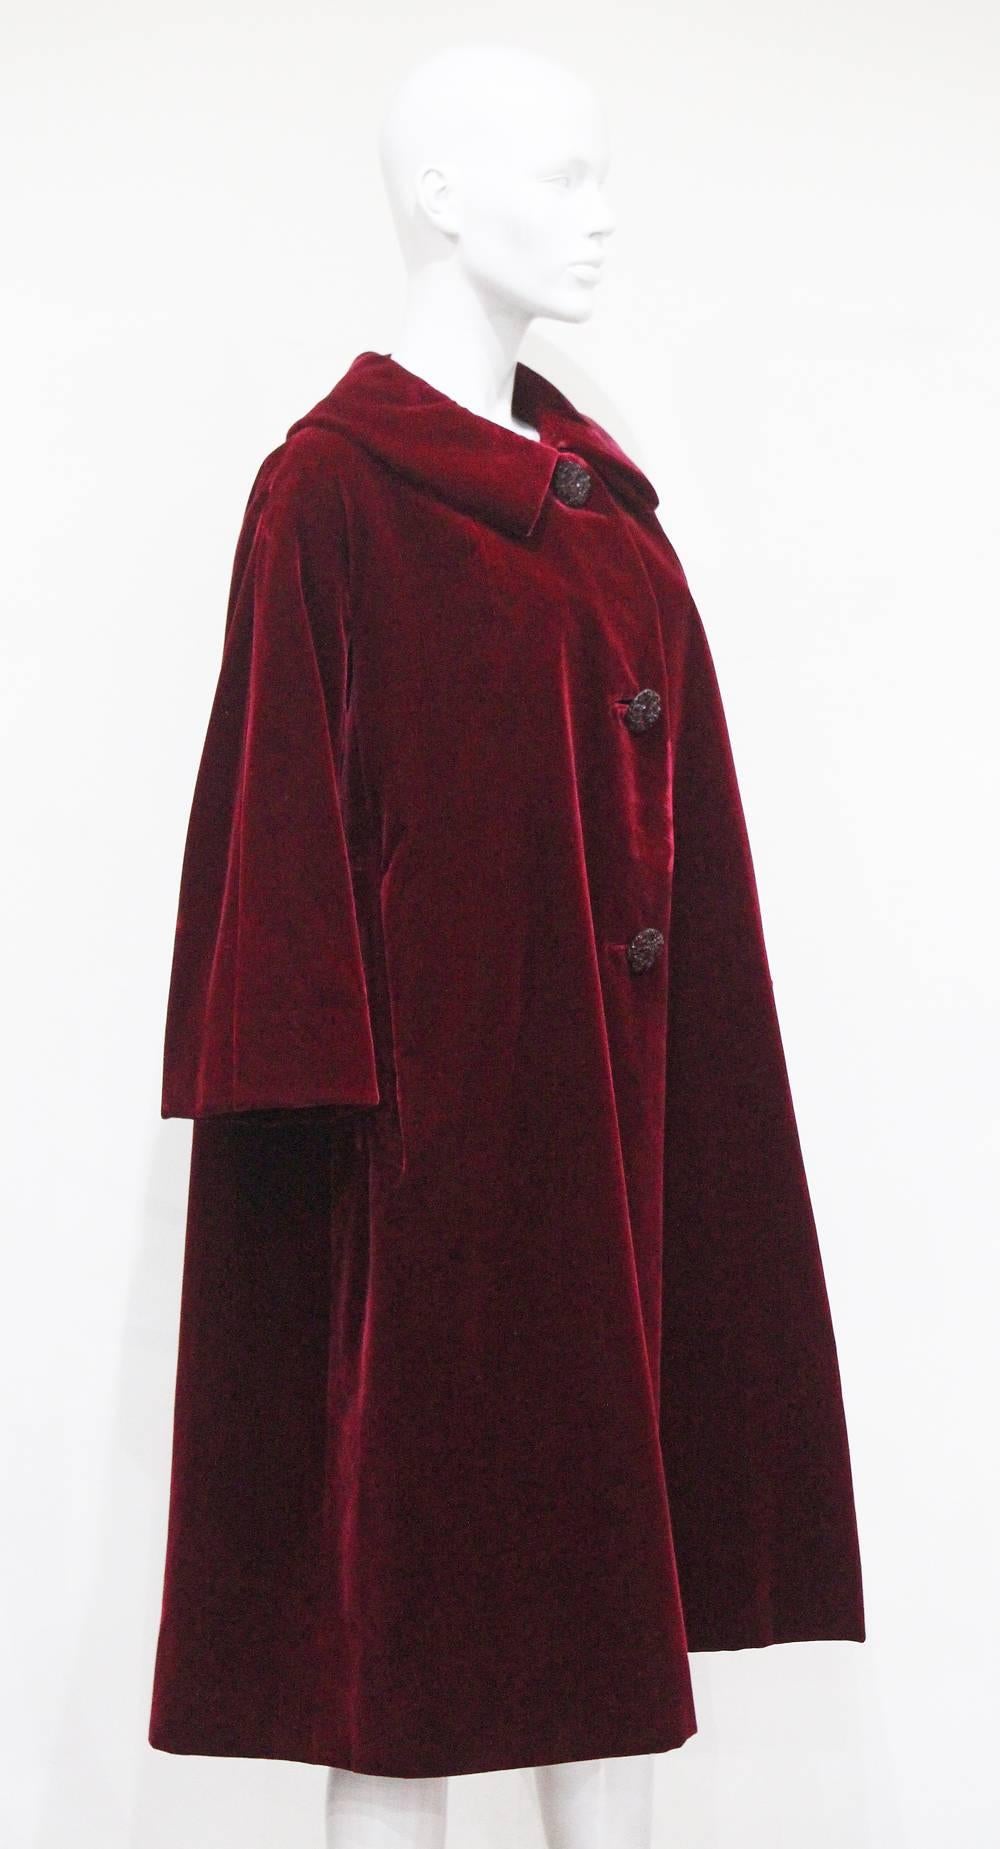 Black Christian Dior Haute Couture silk velvet opera coat, Autumn/Winter 1956